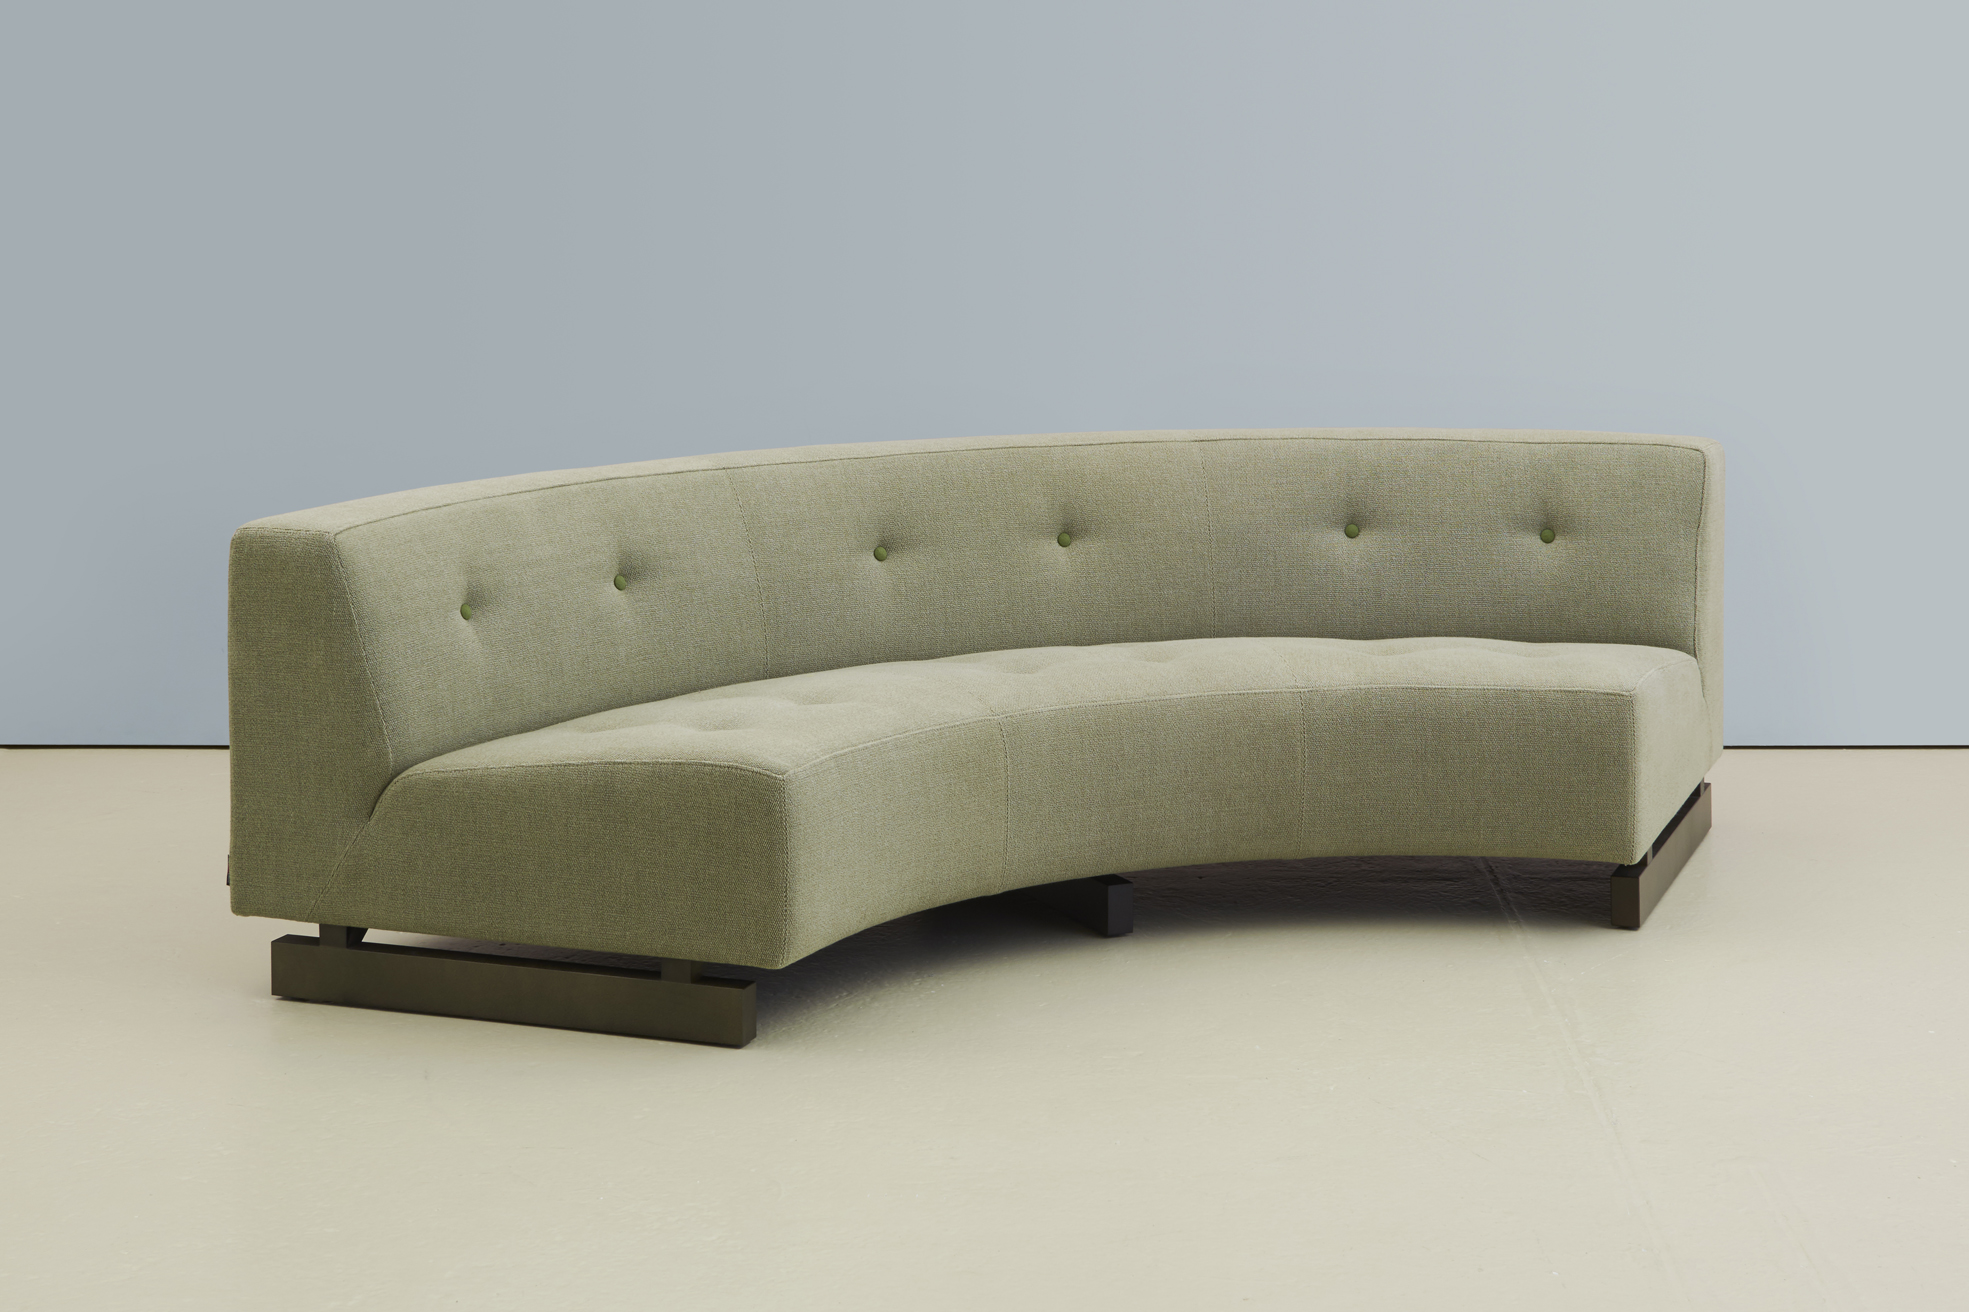 hm46v1 curved sofa (2) (low res).jpg